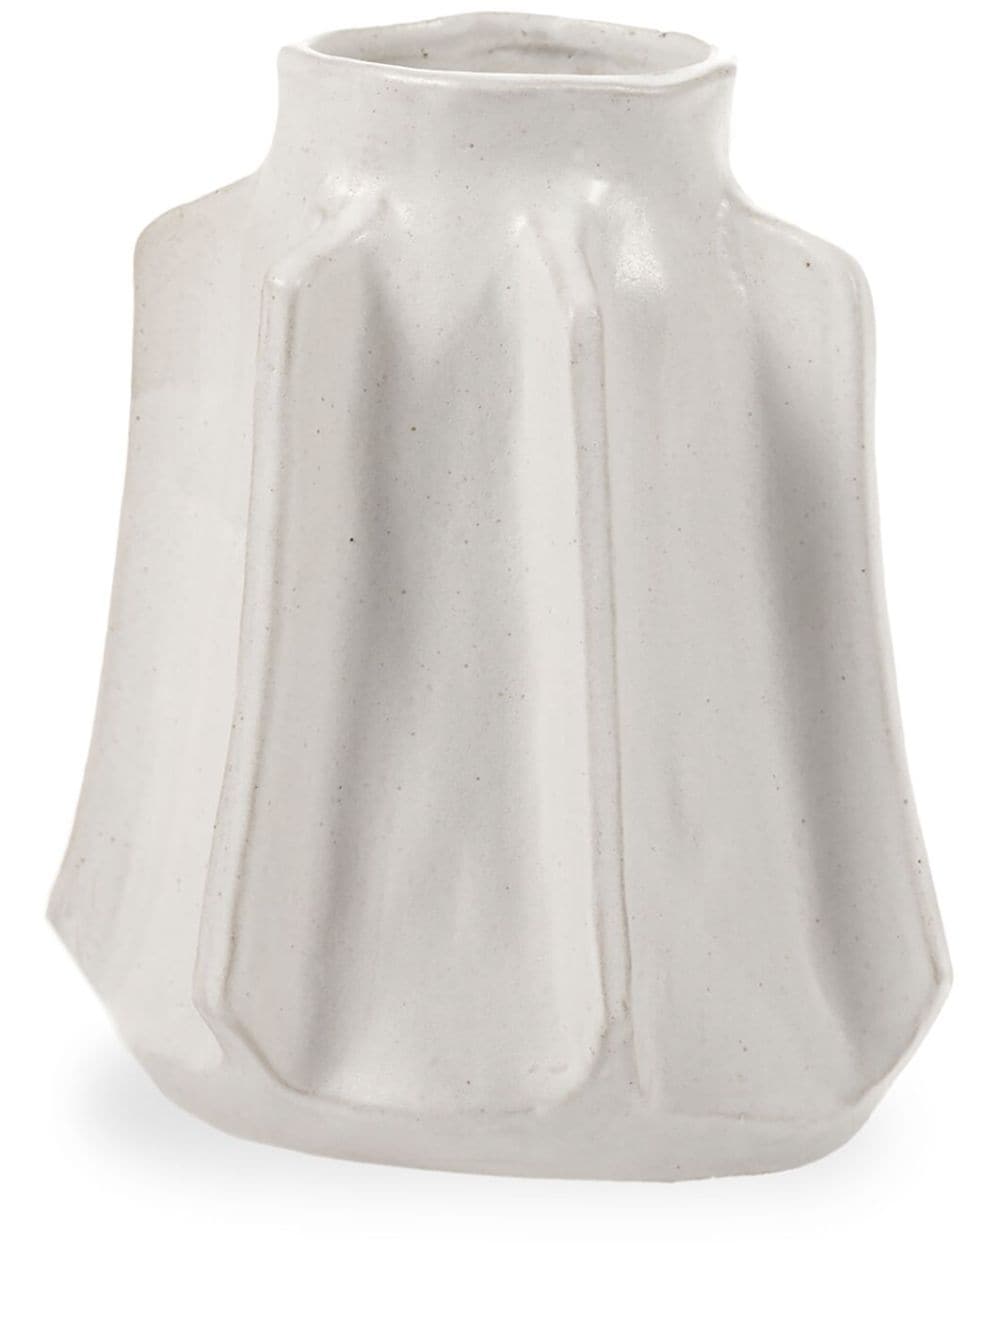 Serax Small Billy 01 Vase In White